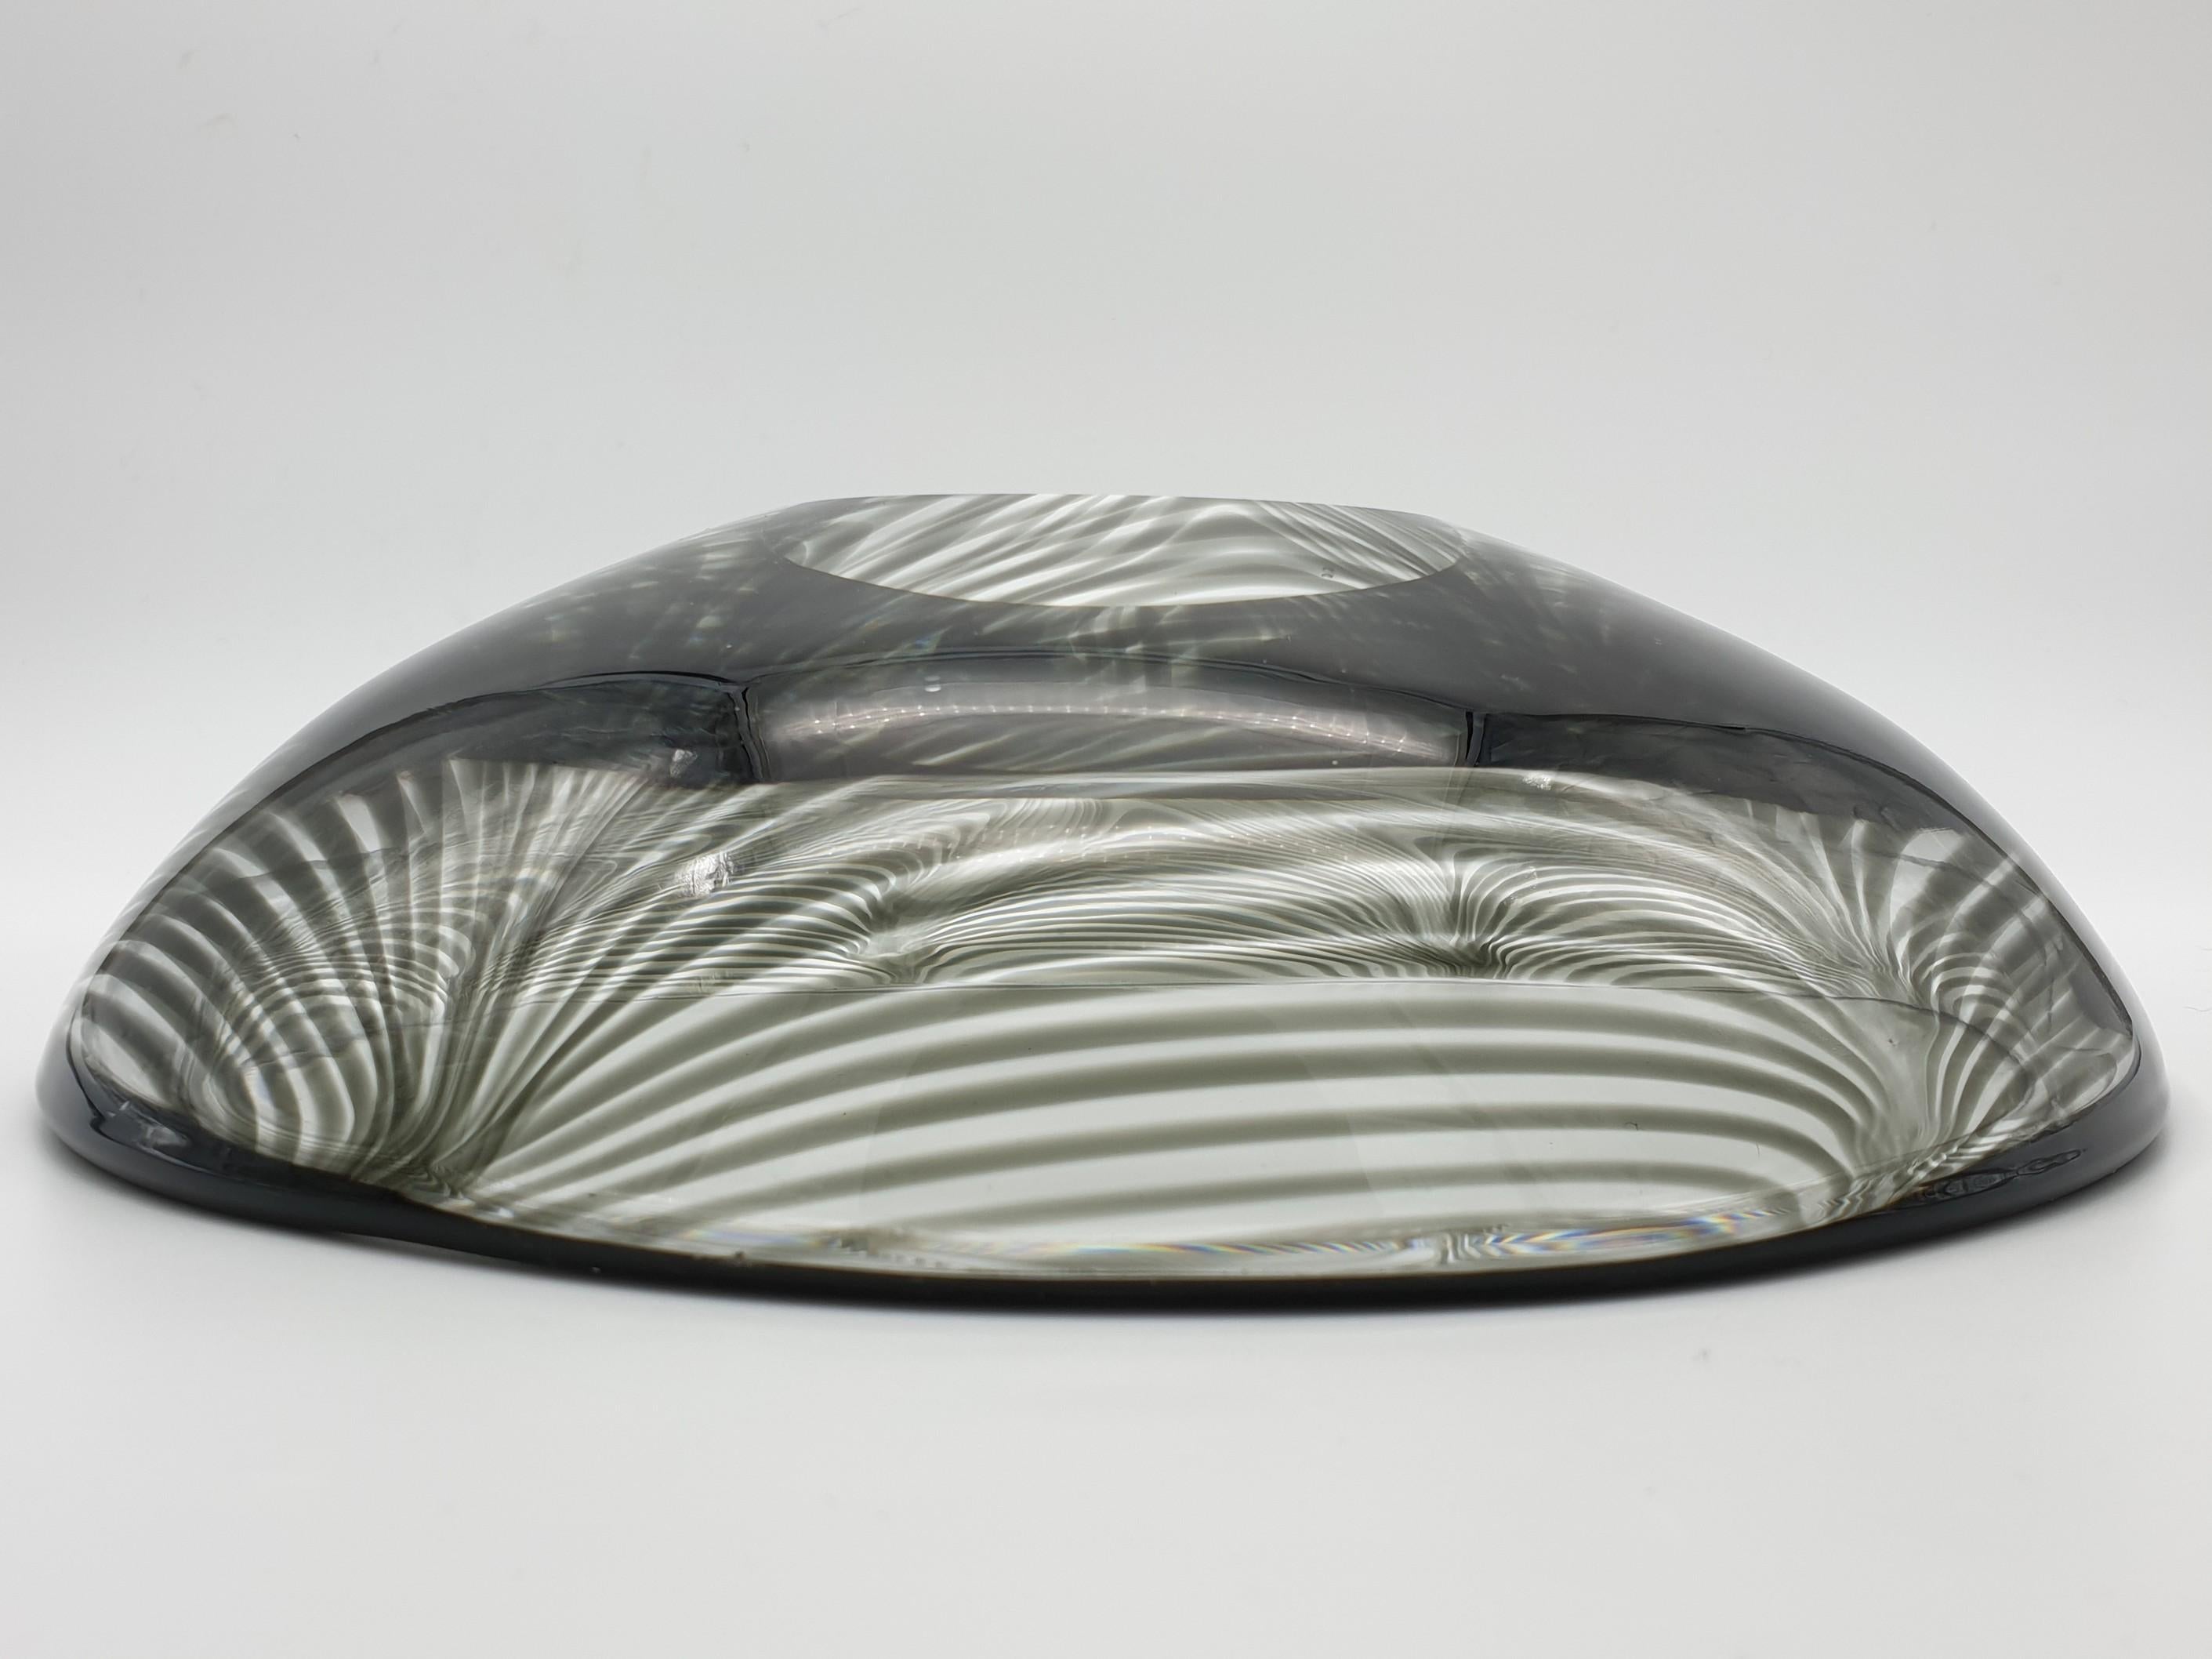 Murano Glass Bowl in 